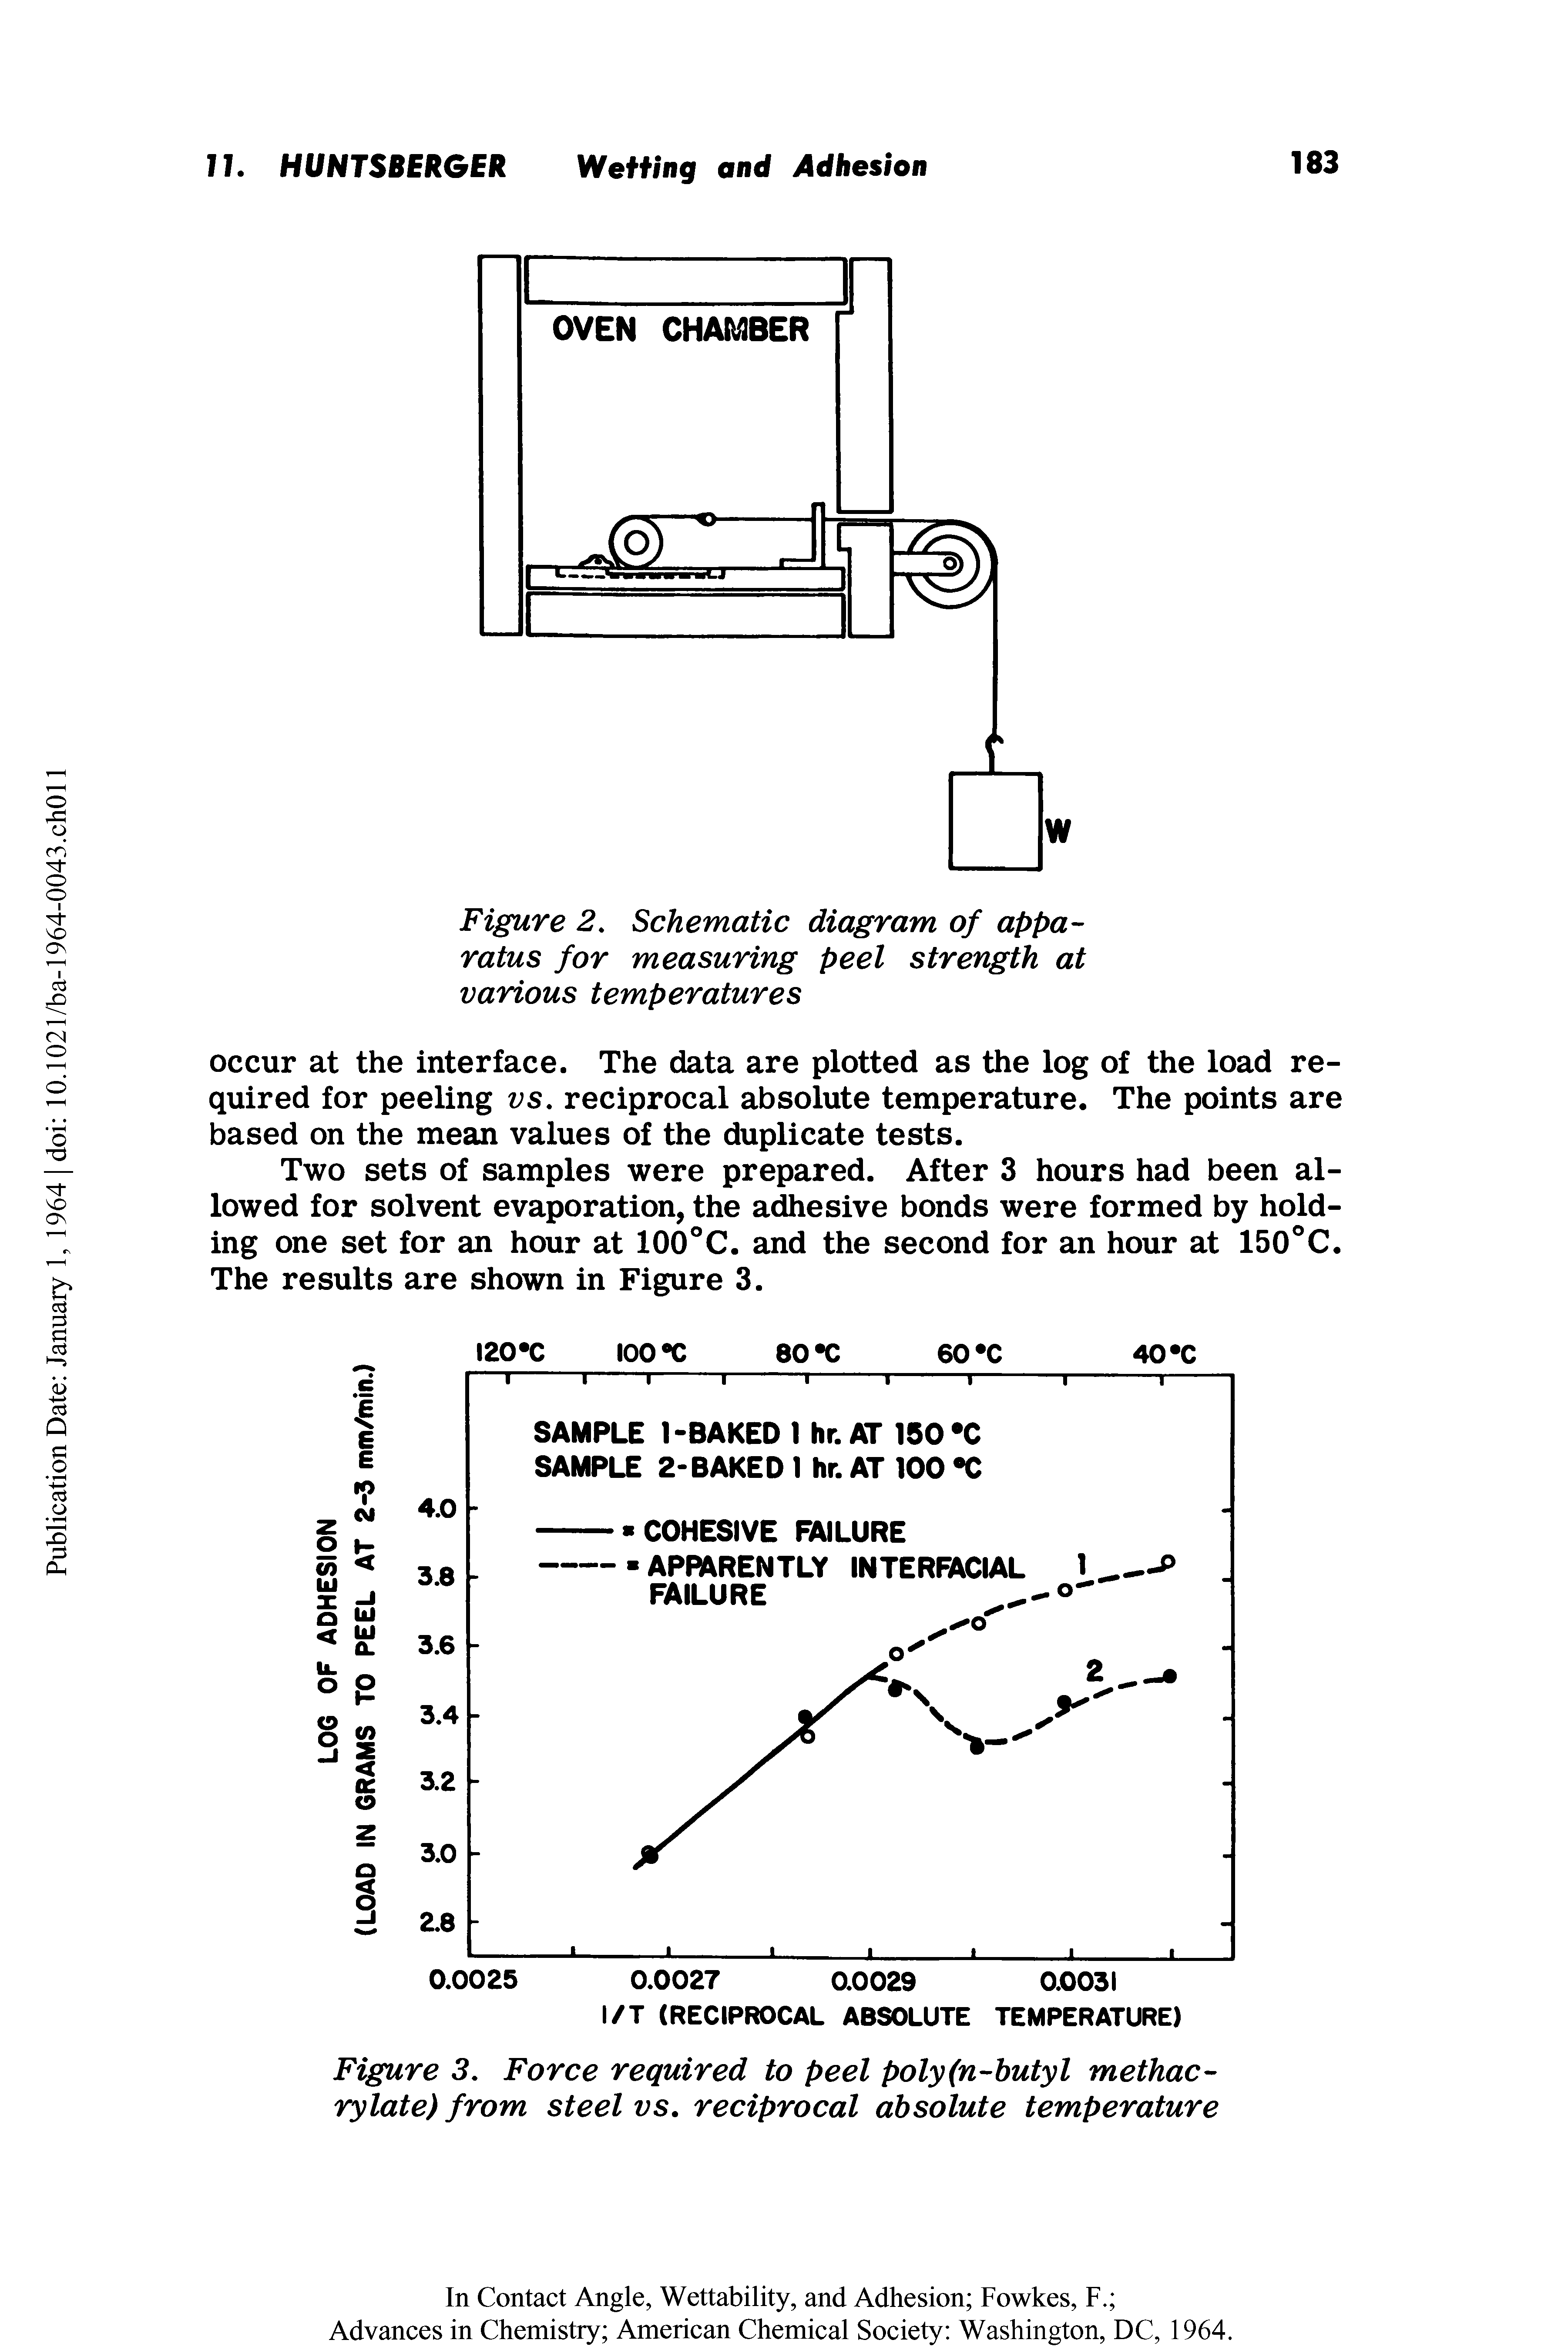 Figure 2. Schematic diagram of apparatus for measuring peel strength at various temperatures...